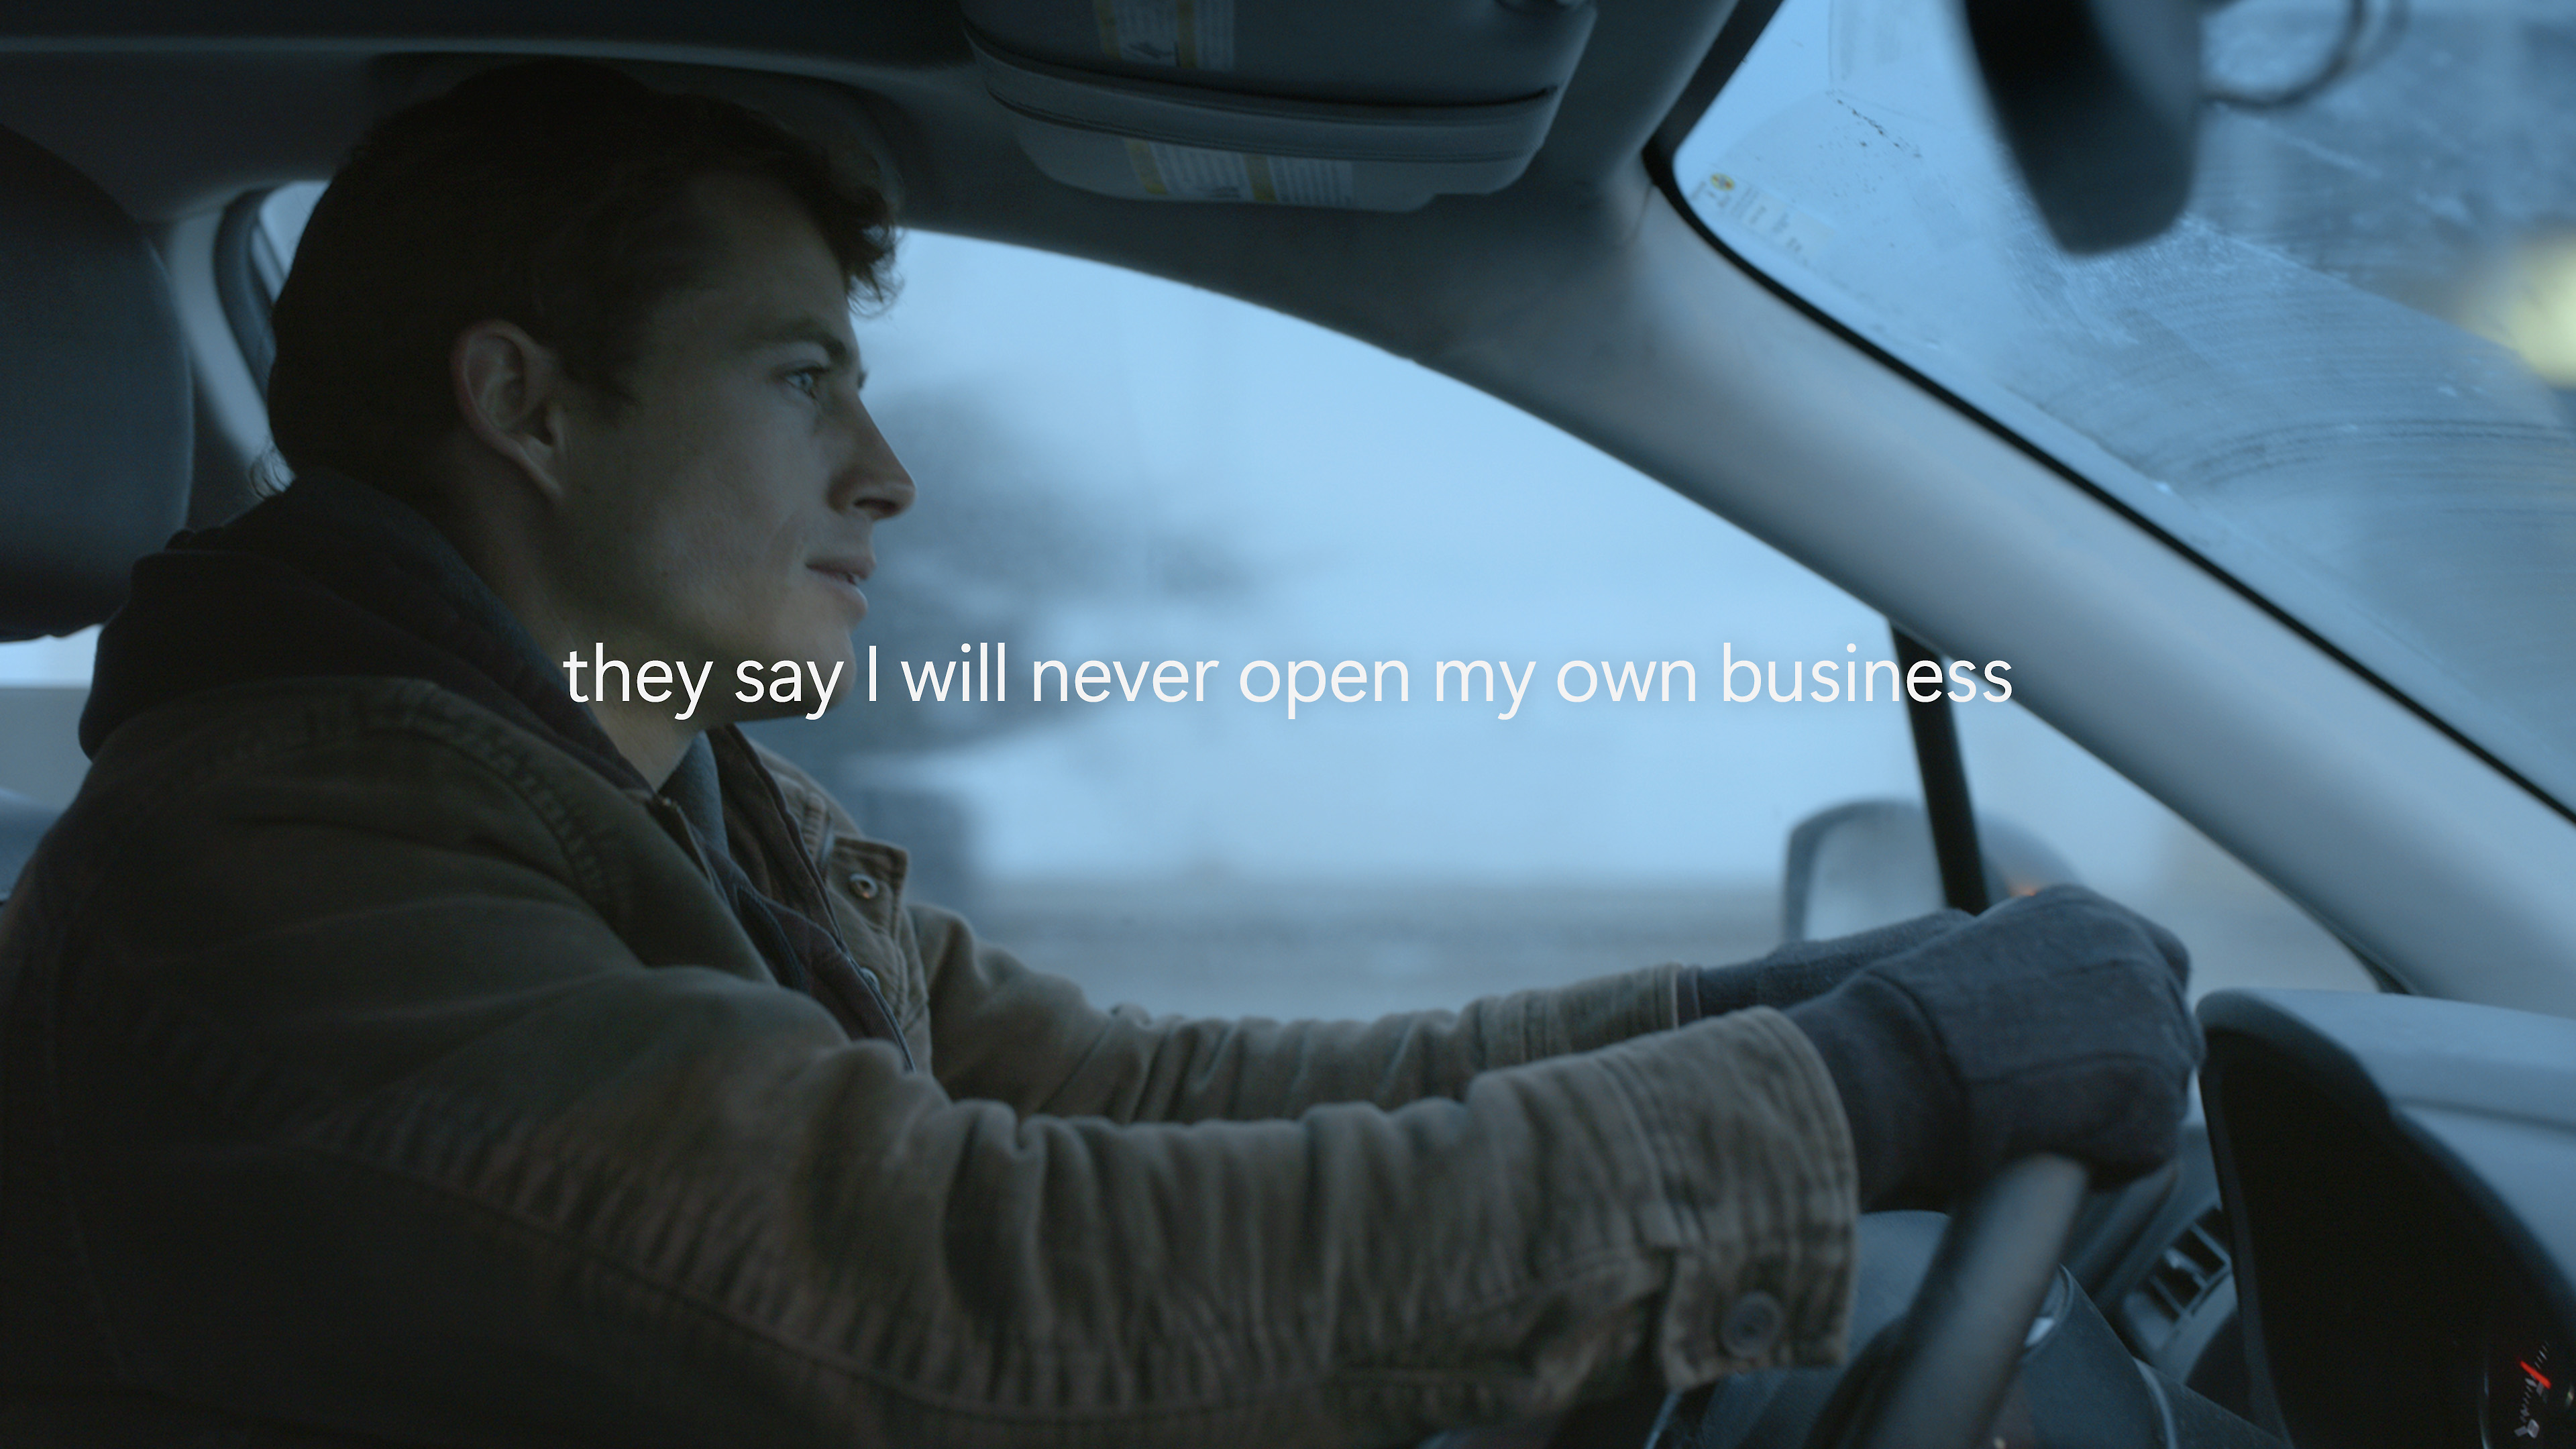 Miniatúra videa o funkcii Copilot s mužom, ktorý šoféruje auto 